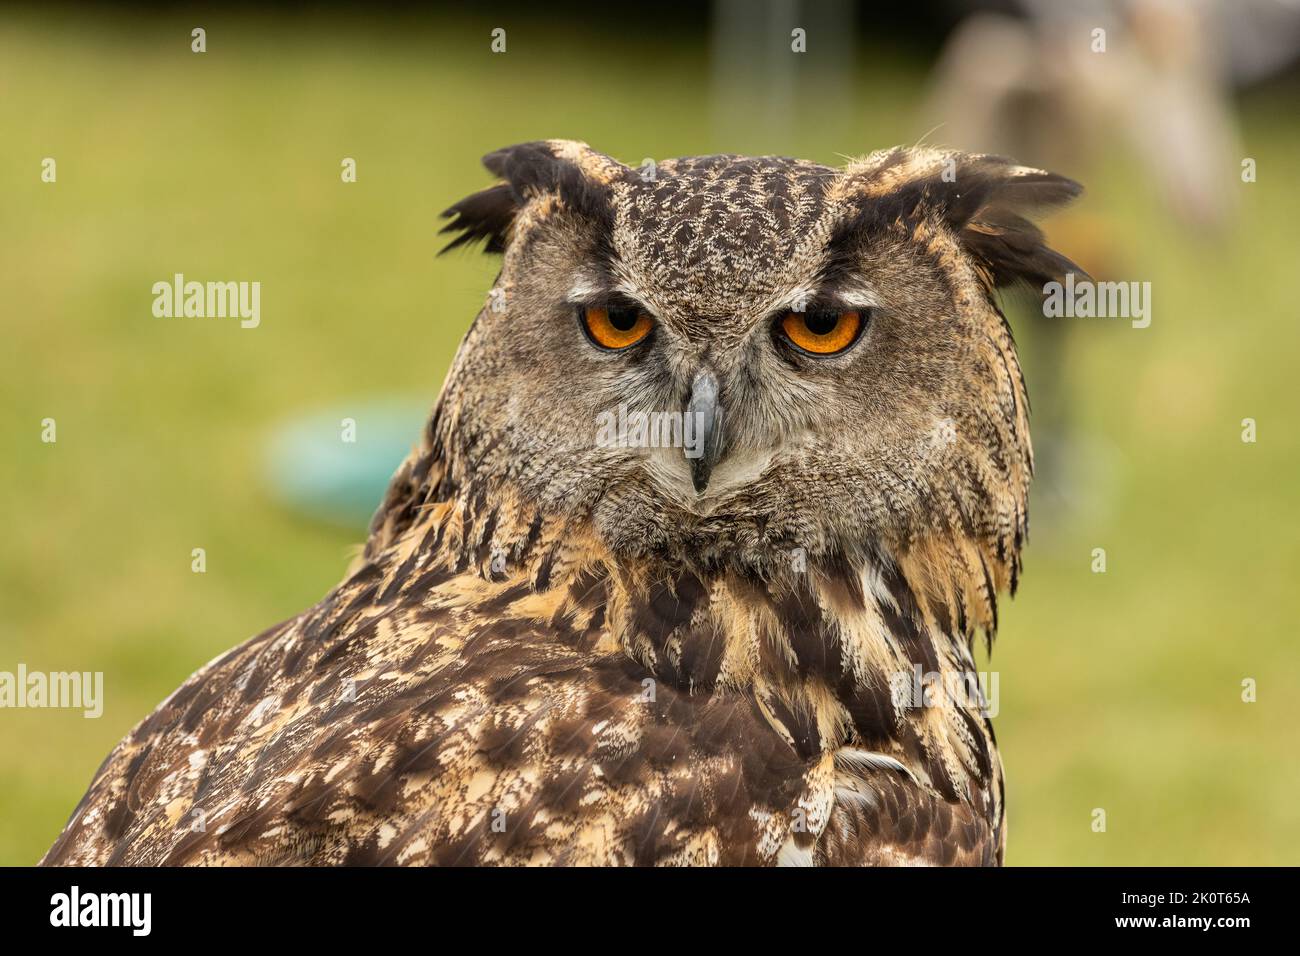 Close up of a Captive Eurasian Eagle Owl at a show Stock Photo